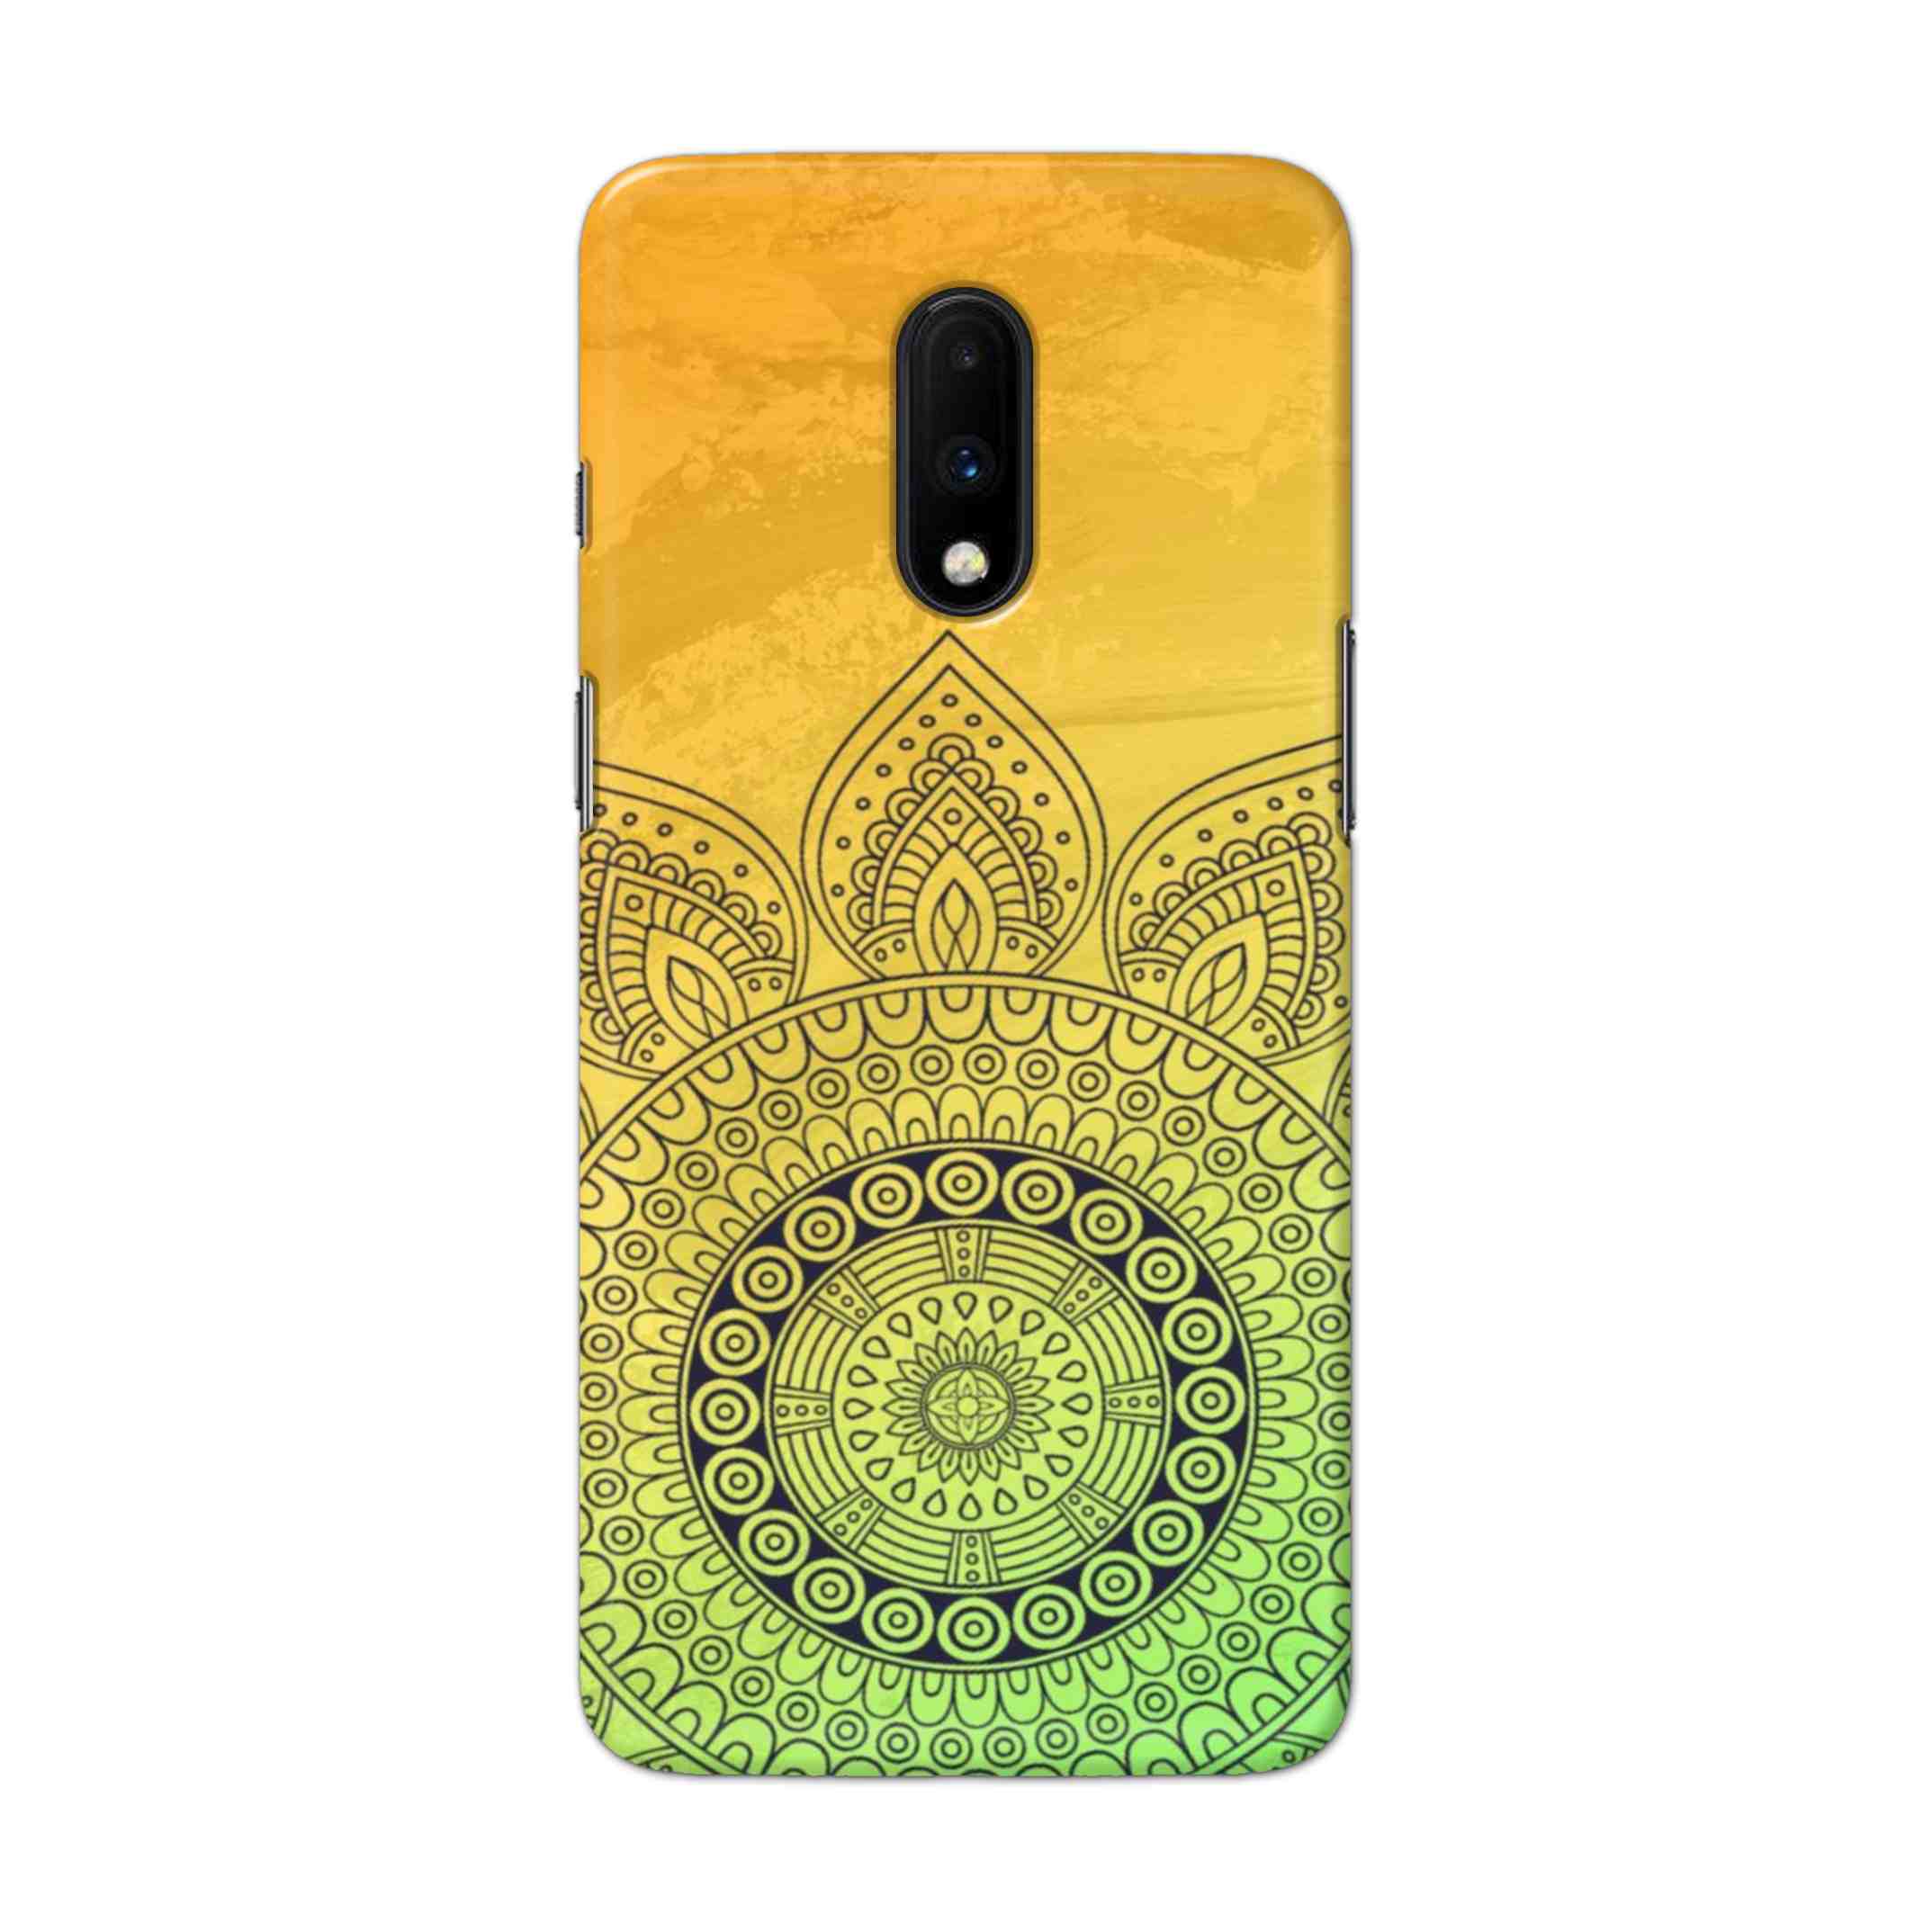 Buy Yellow Rangoli Hard Back Mobile Phone Case Cover For OnePlus 7 Online